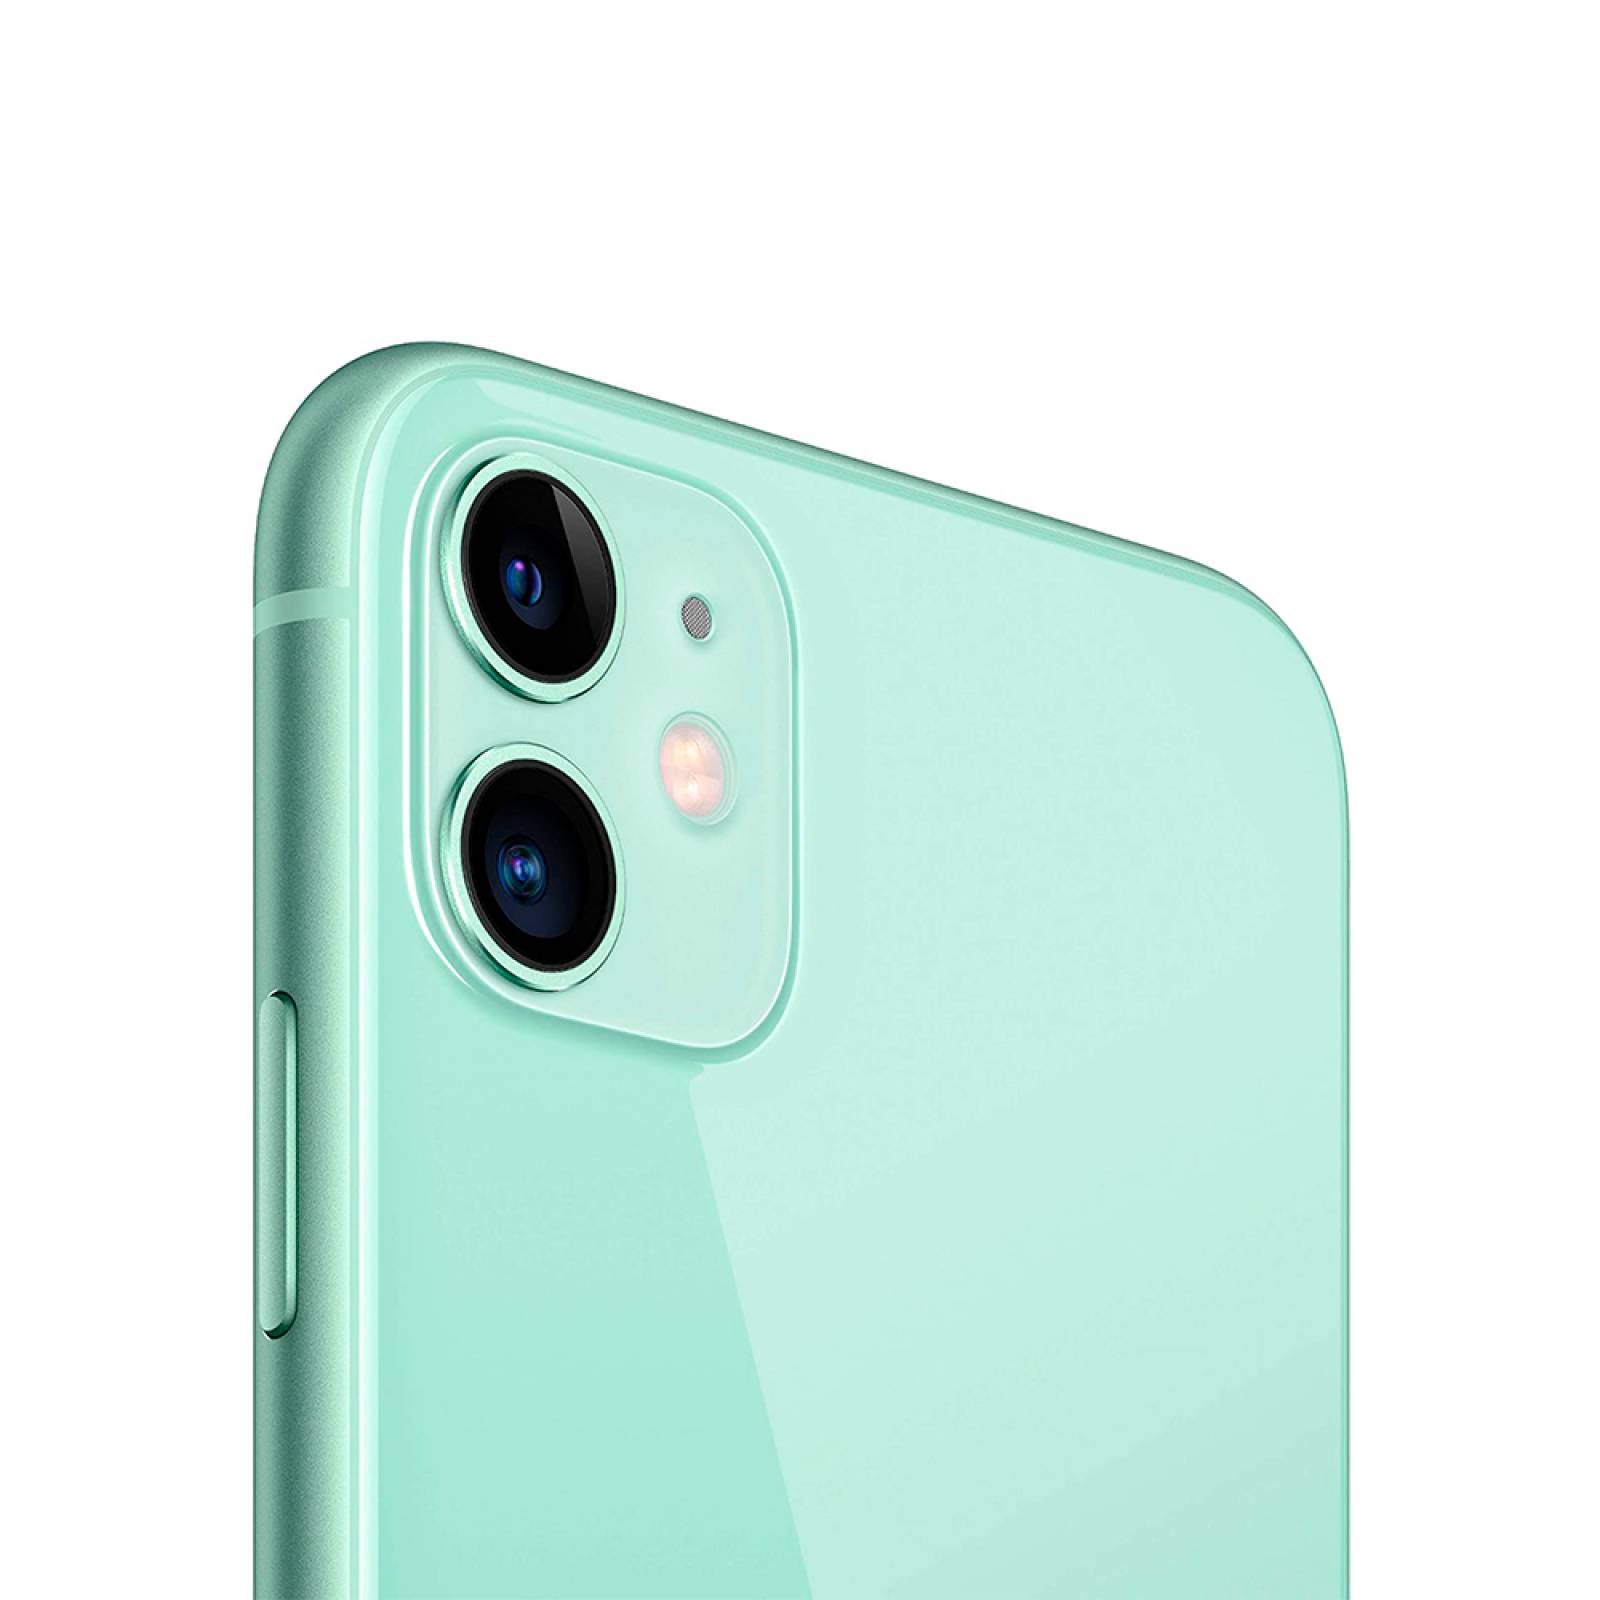 Apple iPhone 11 128GB Verde Renewd (Reacondicionado A++) - Smartphone